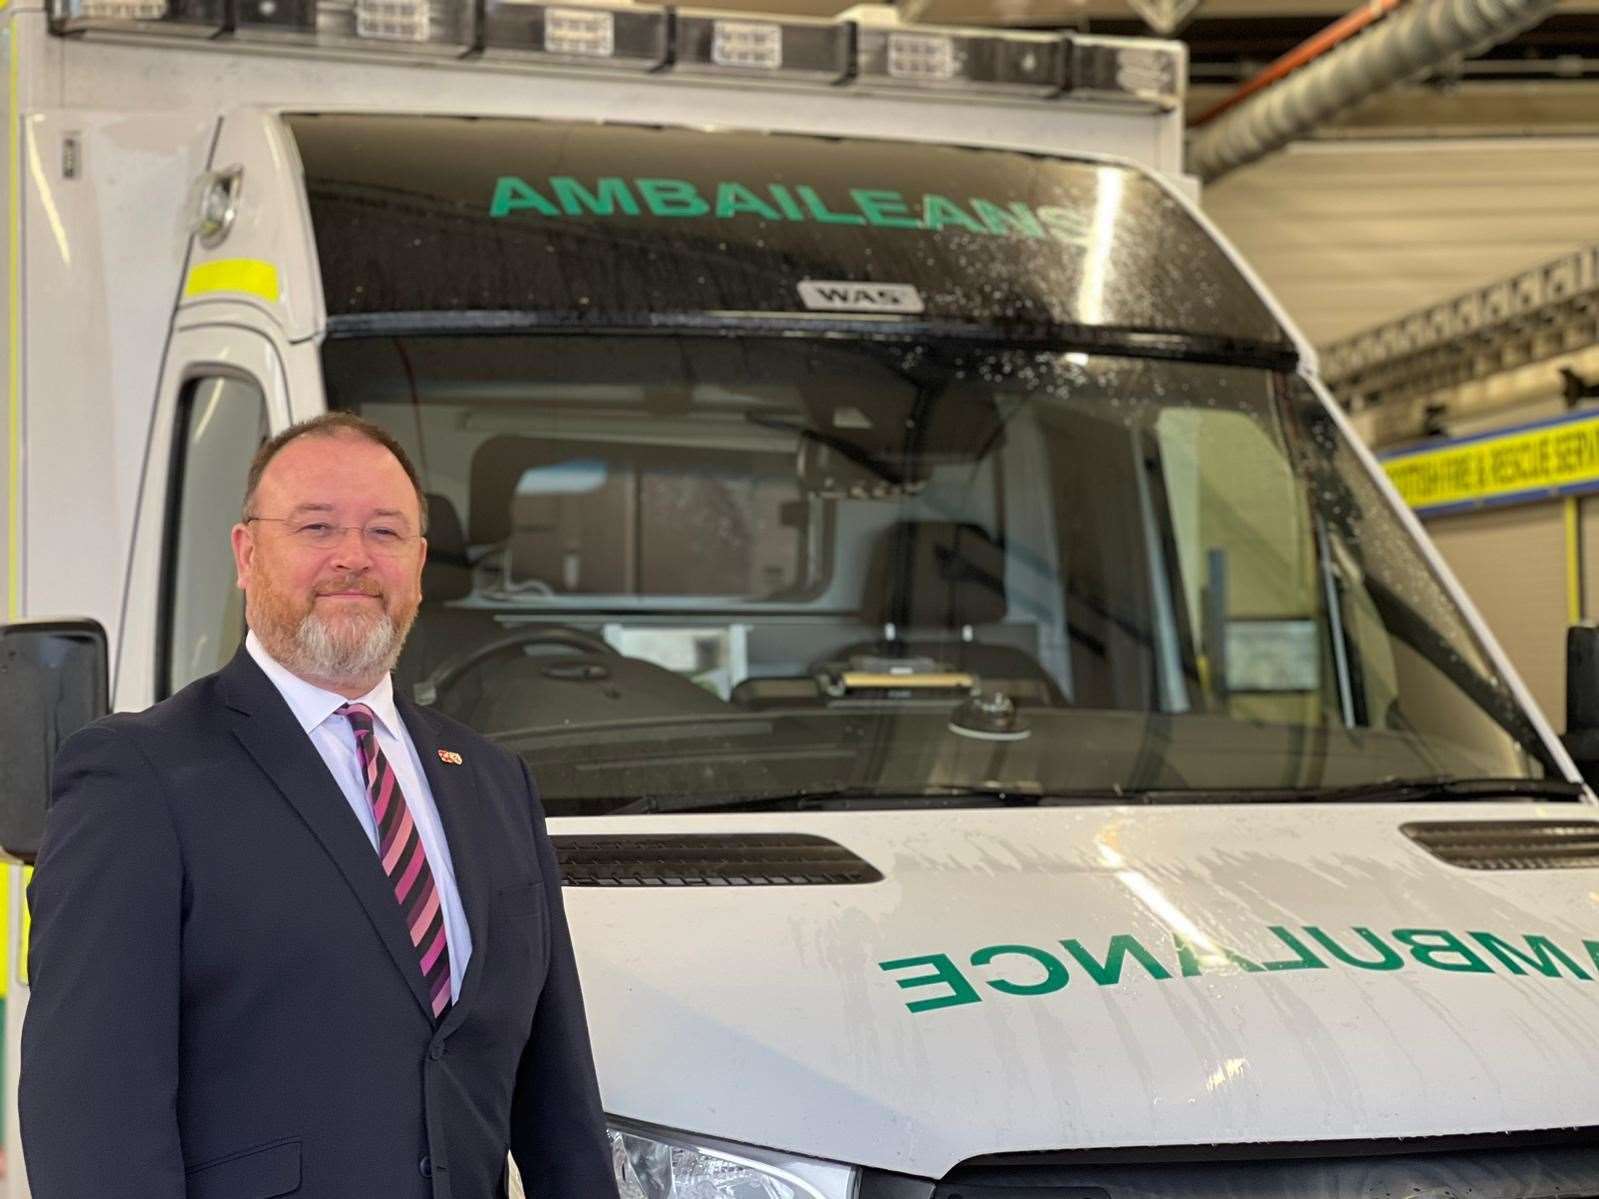 MP David Duguid welcomed the new ambulance for Turriff last week.